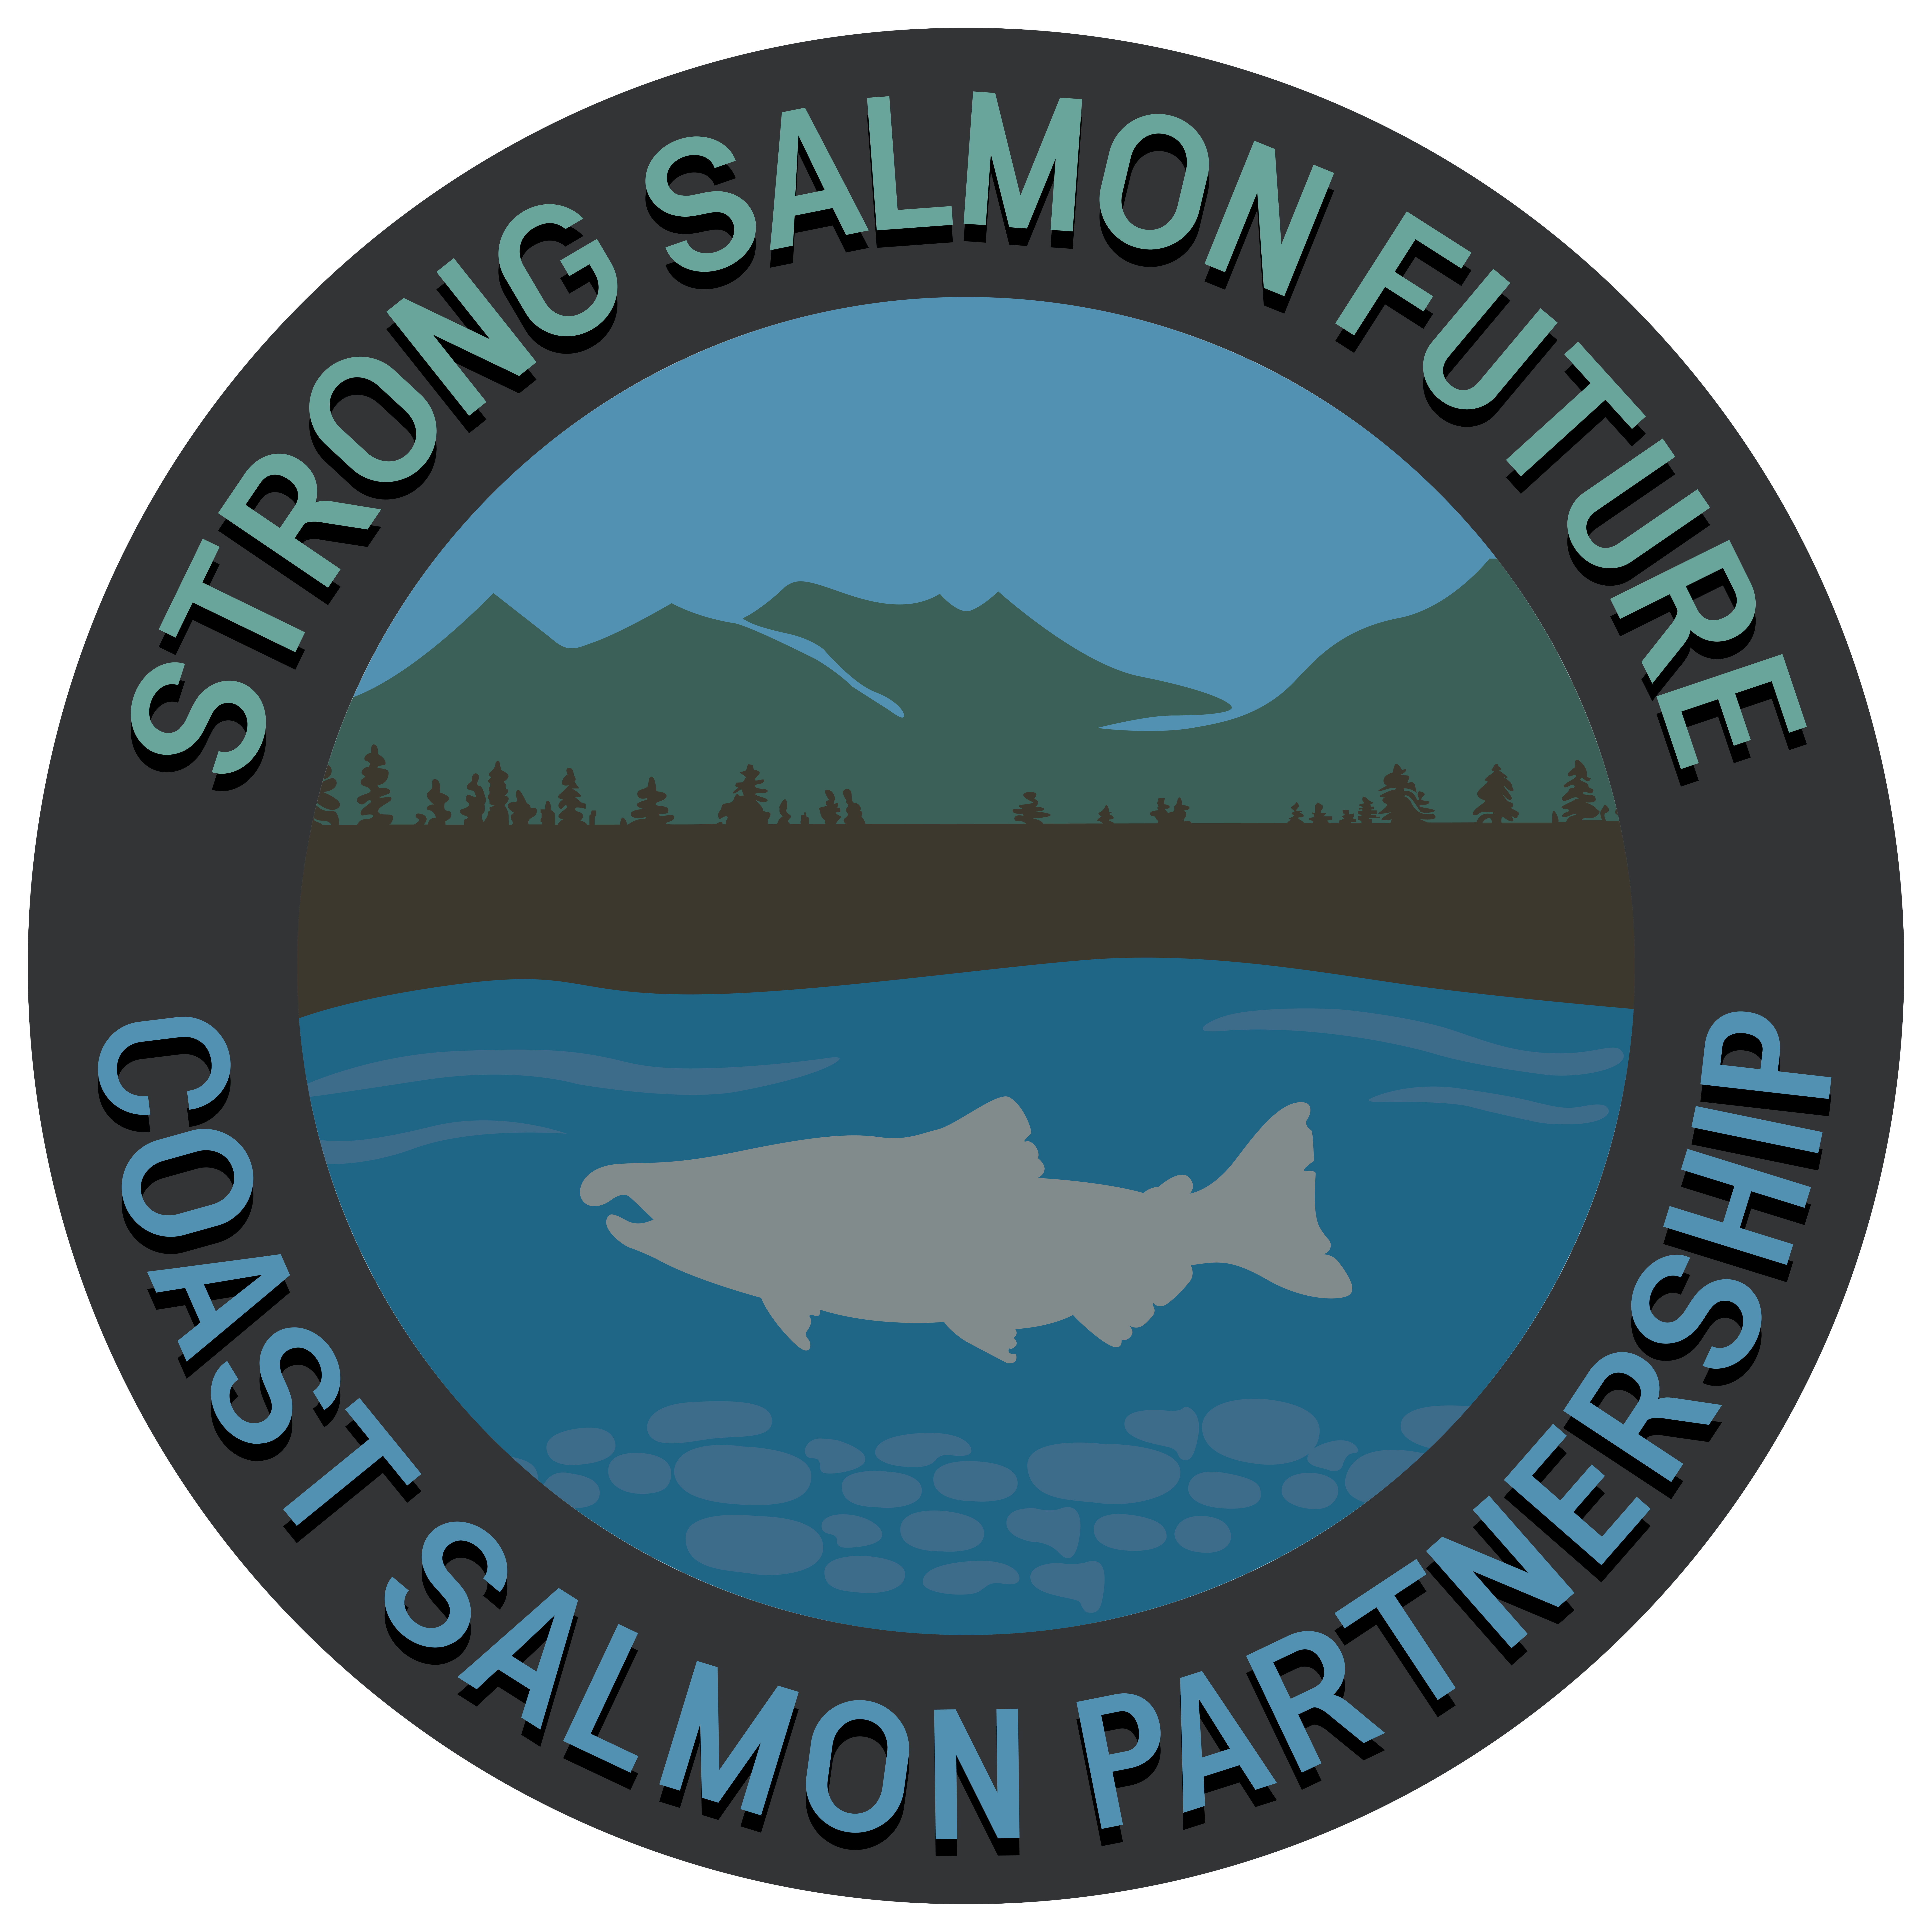 Strong Salmon Future